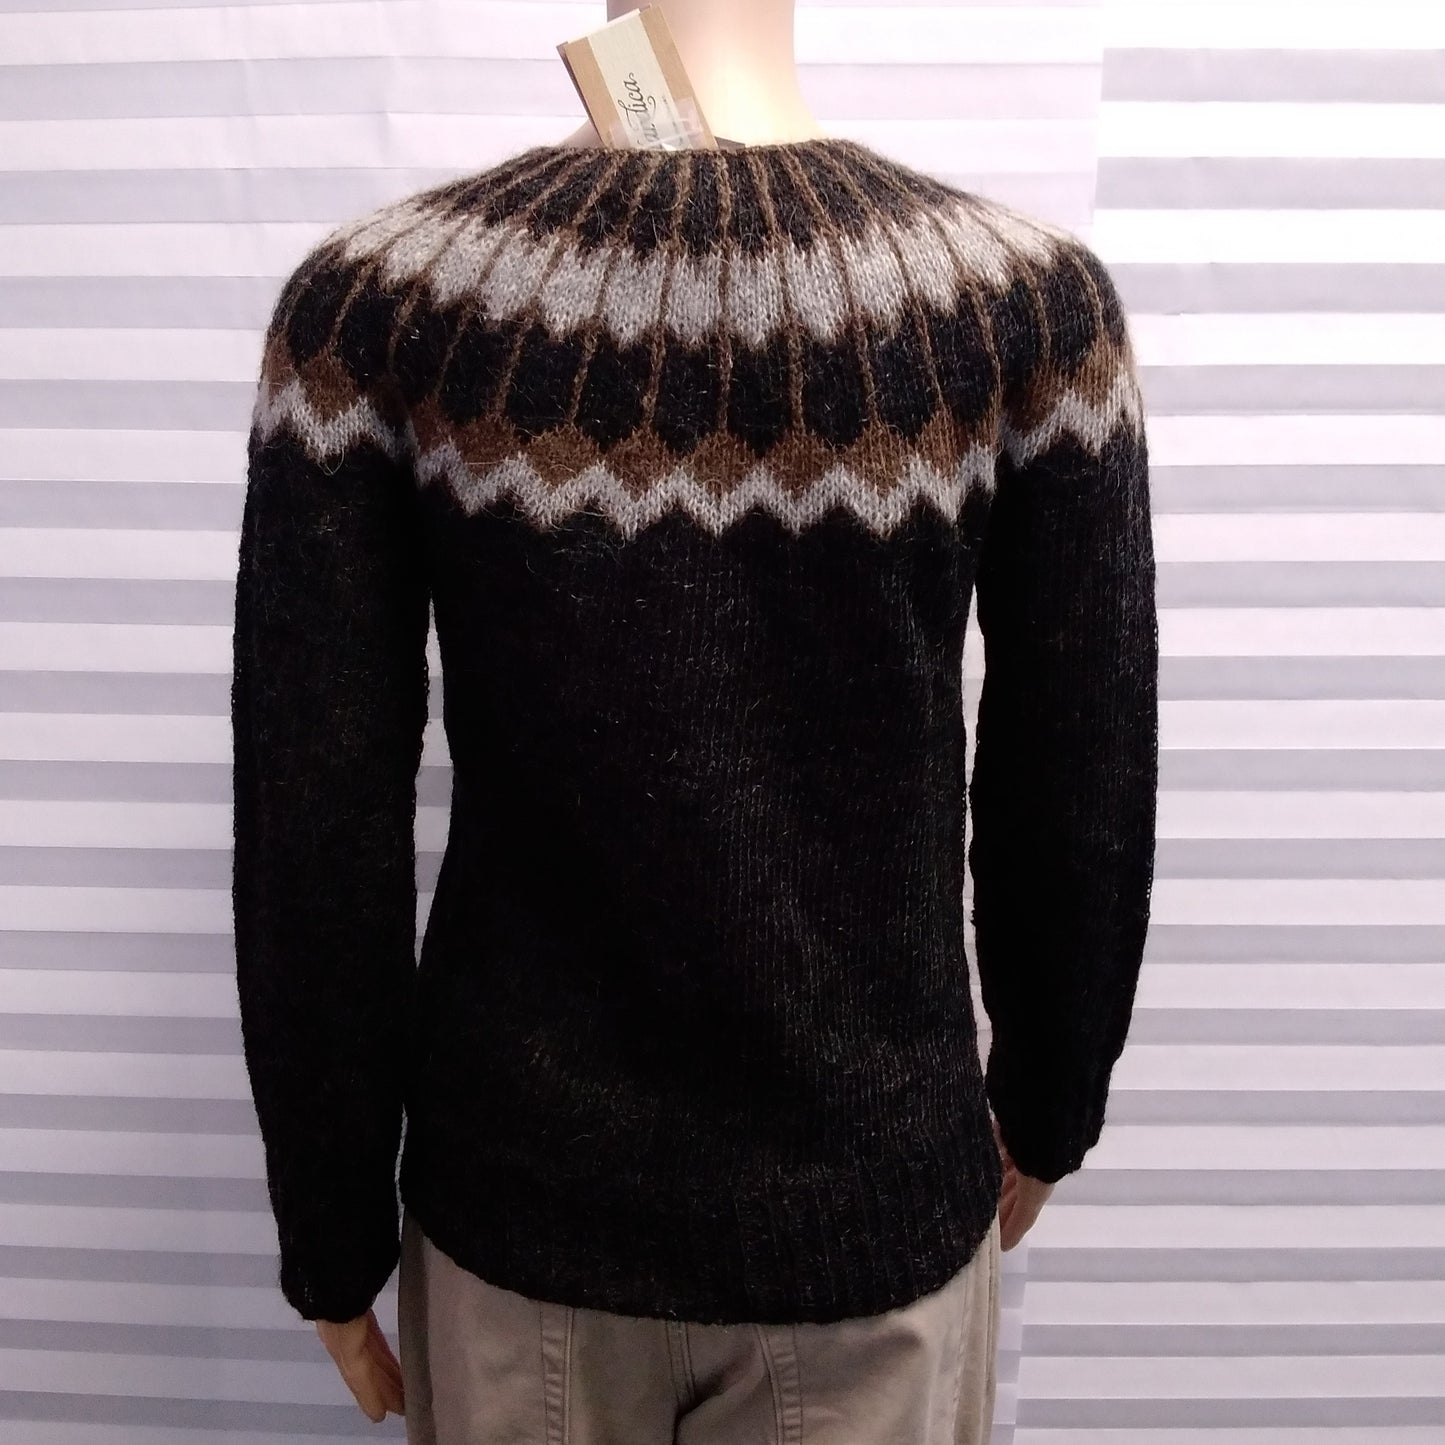 NWT - Vintage Icelandica Black Brown Fifa Cardigan Sweater - S/M